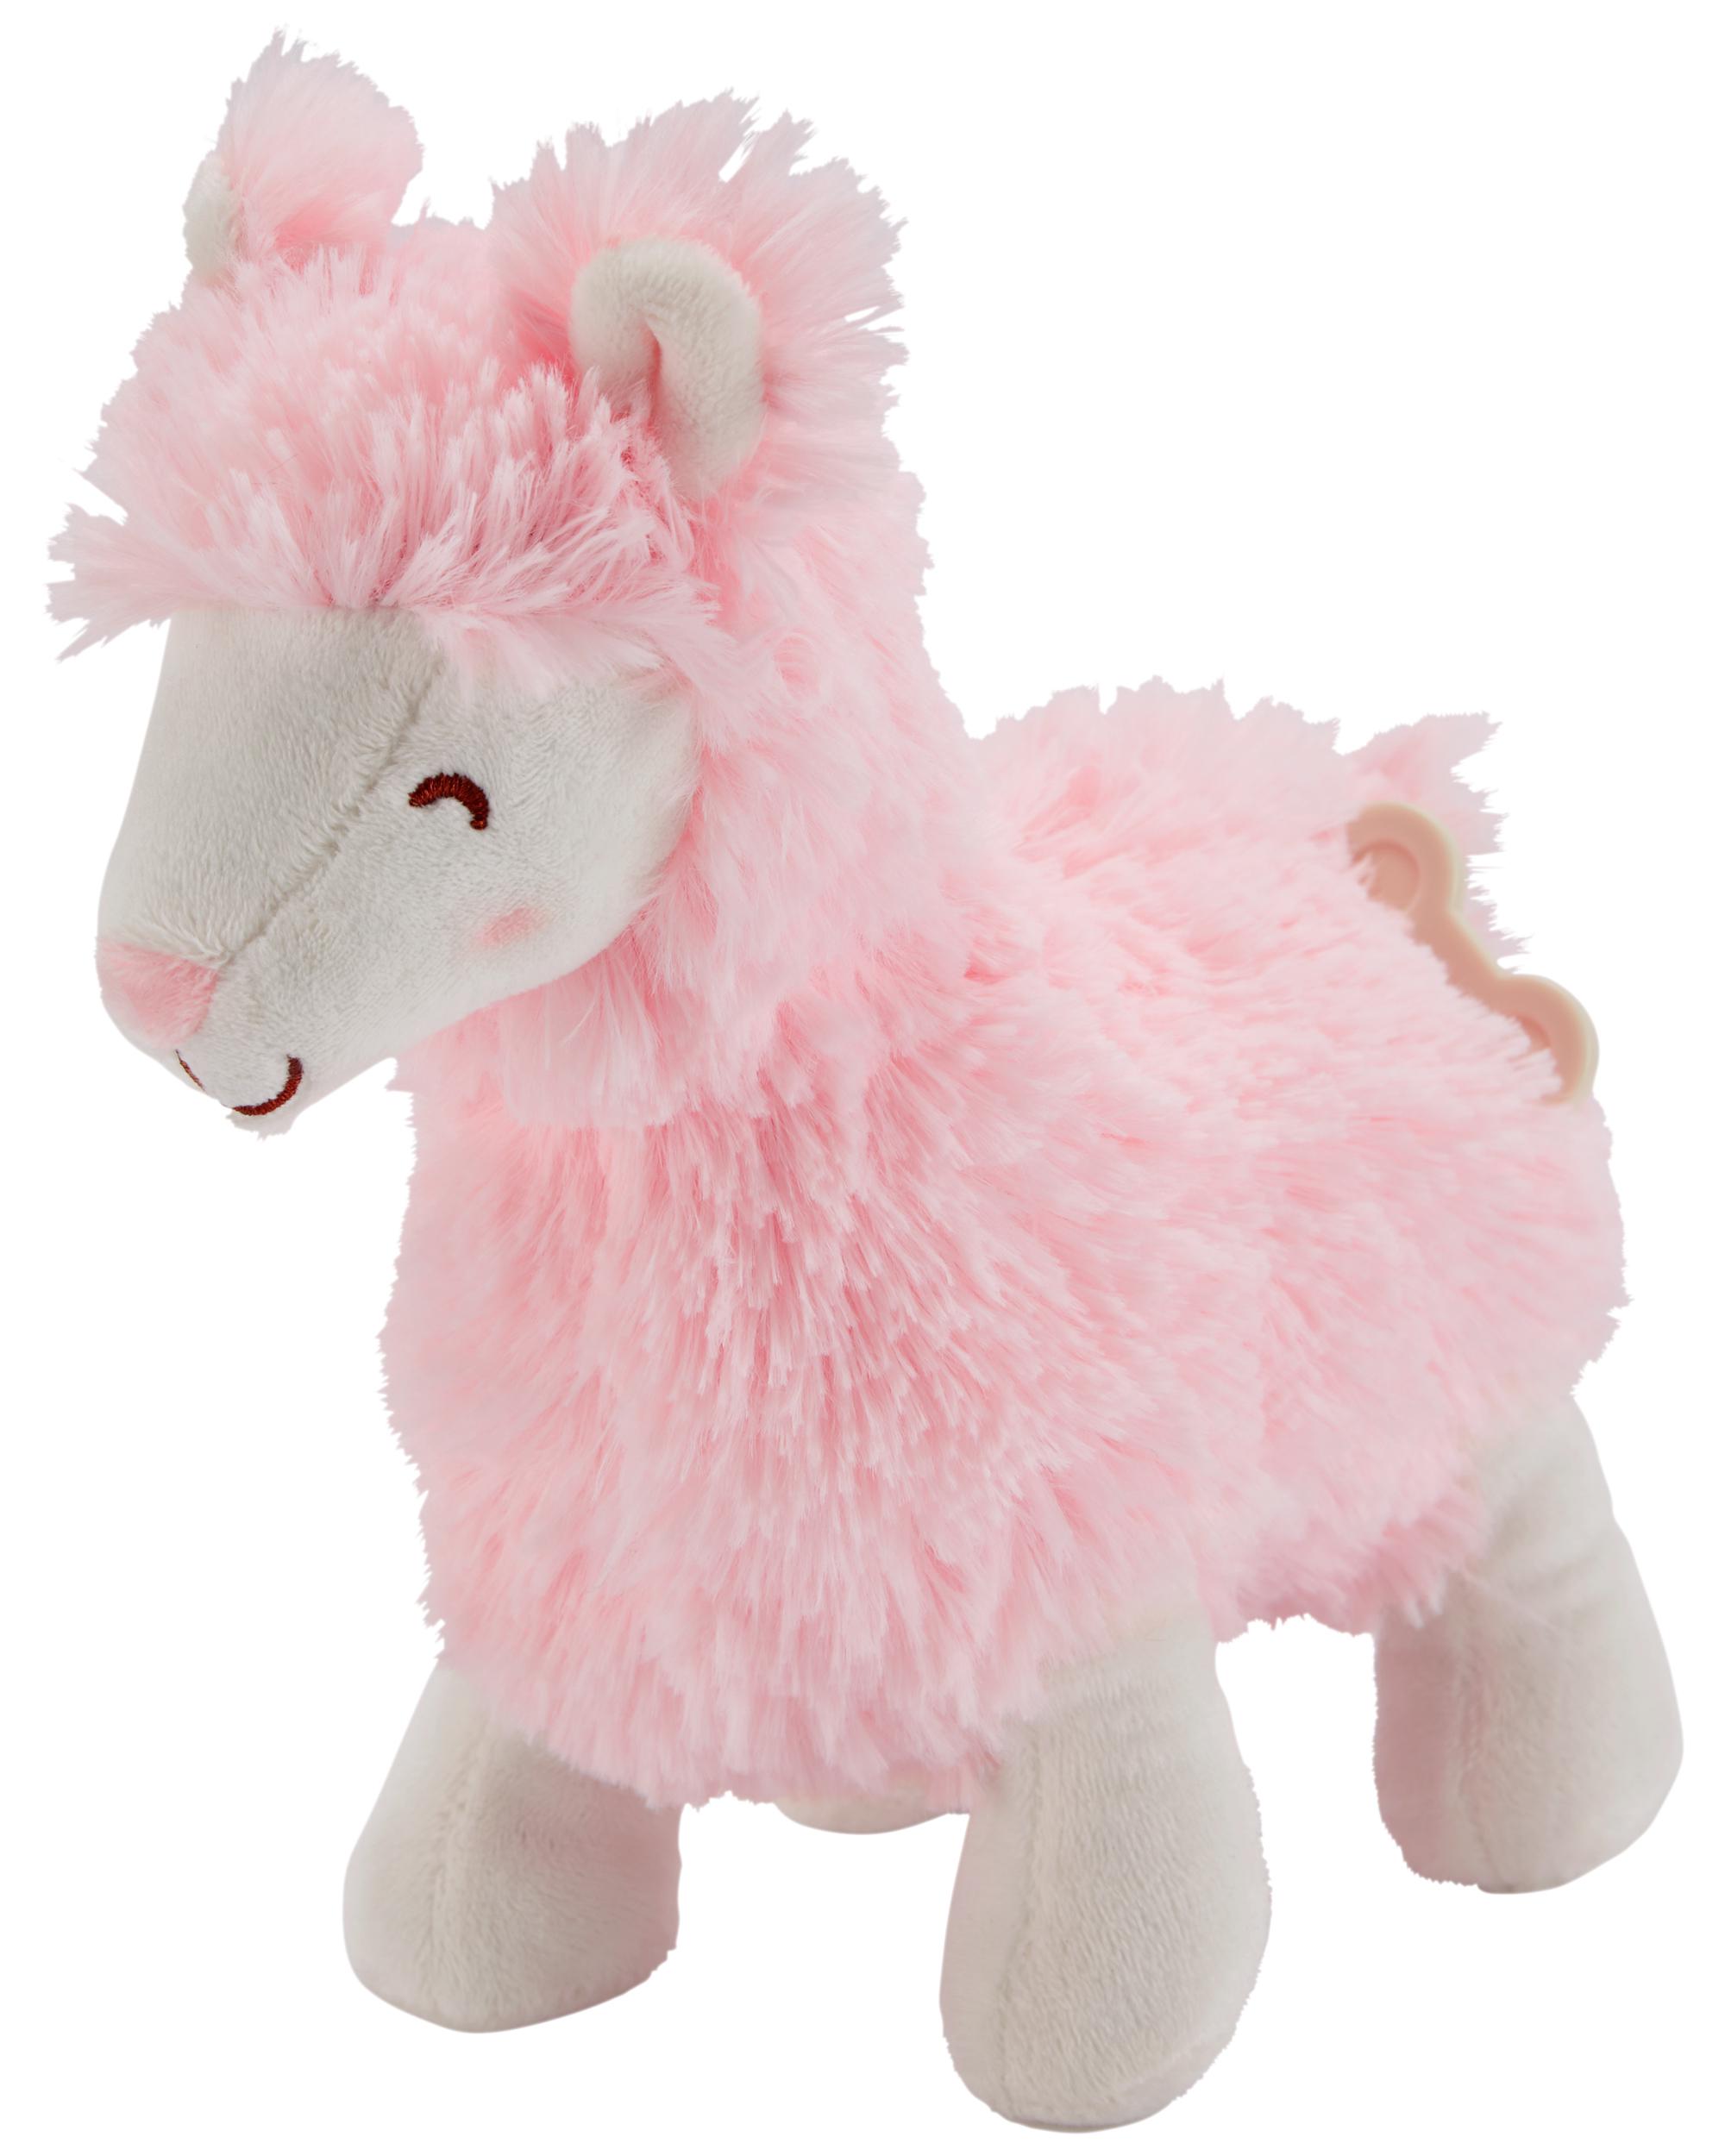 Llama Waggy Musical Plush Toy